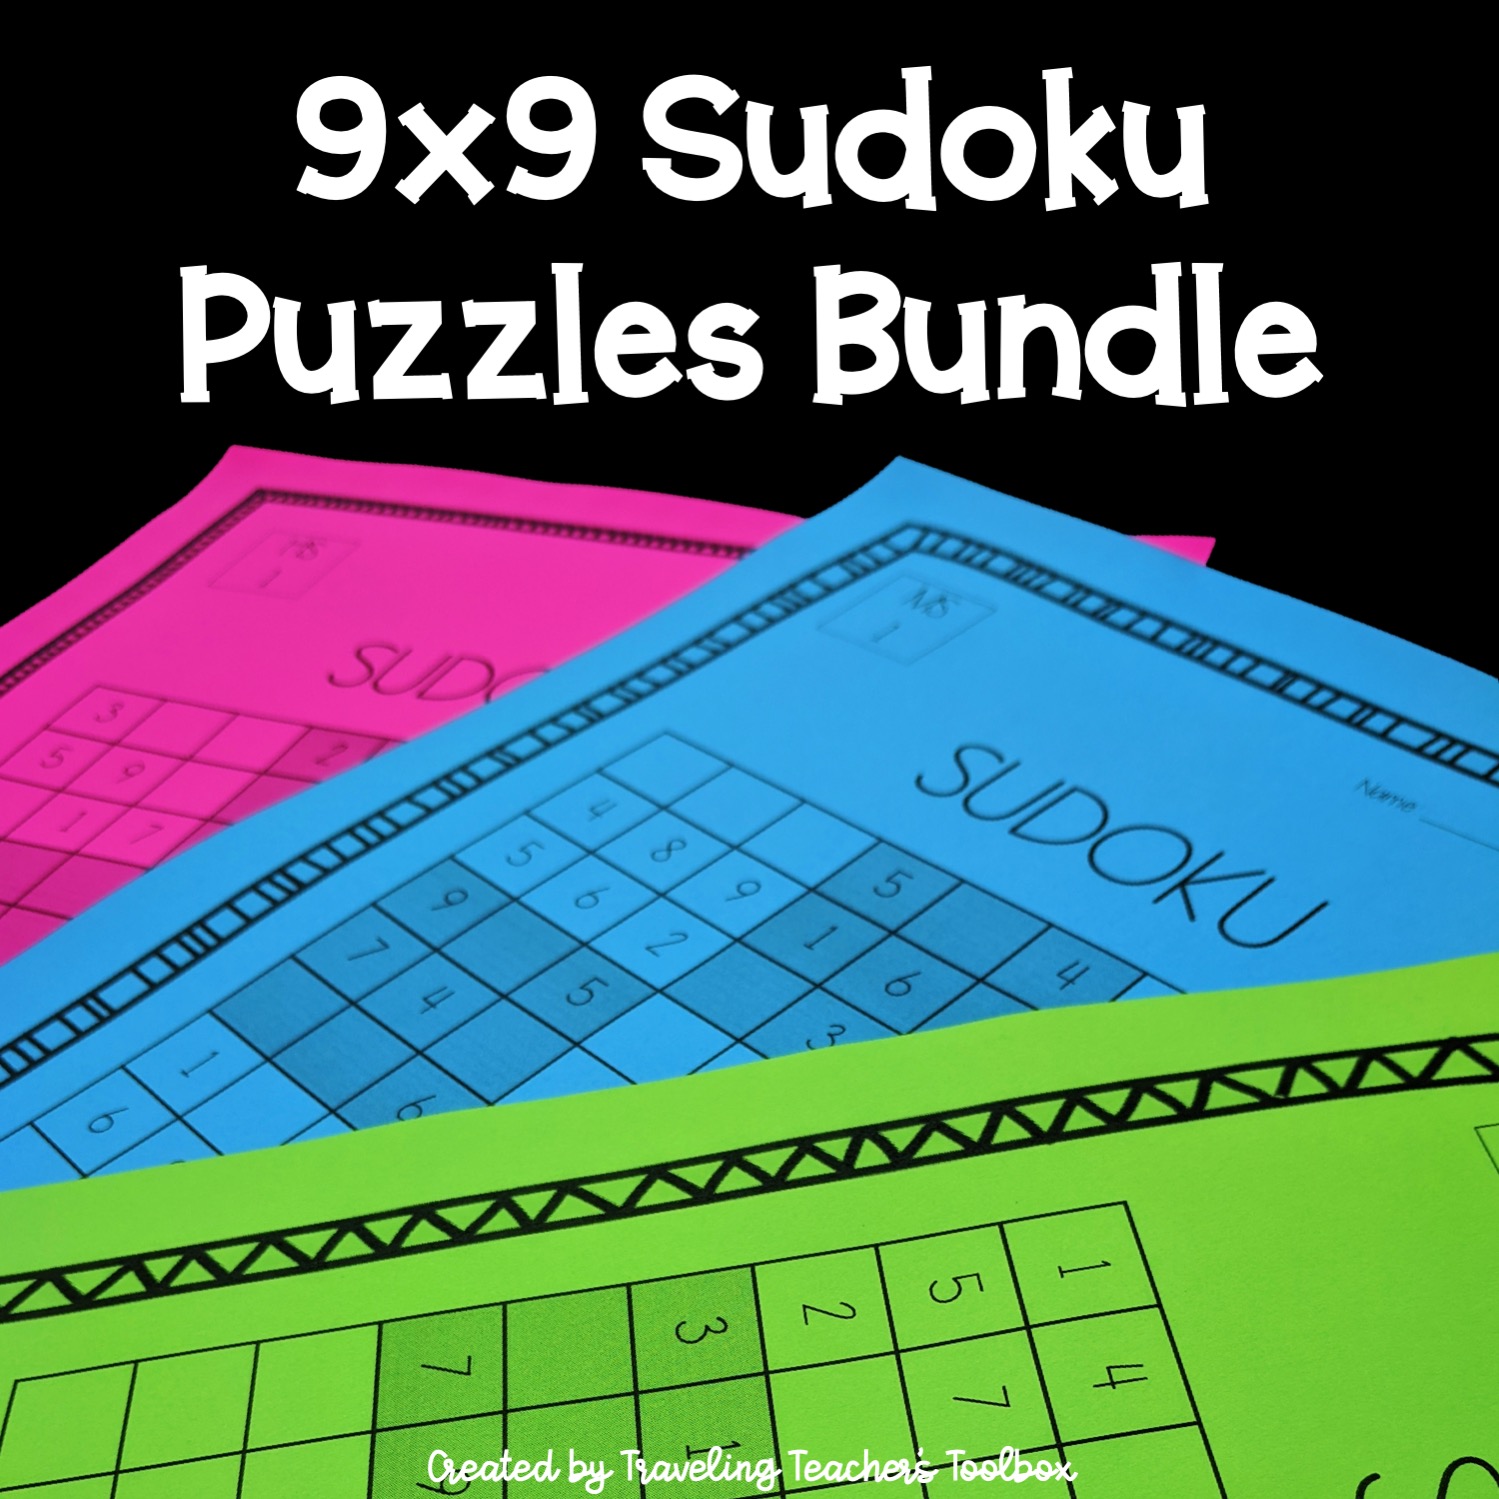 Clickable image of paper 9x9 sudoku puzzles